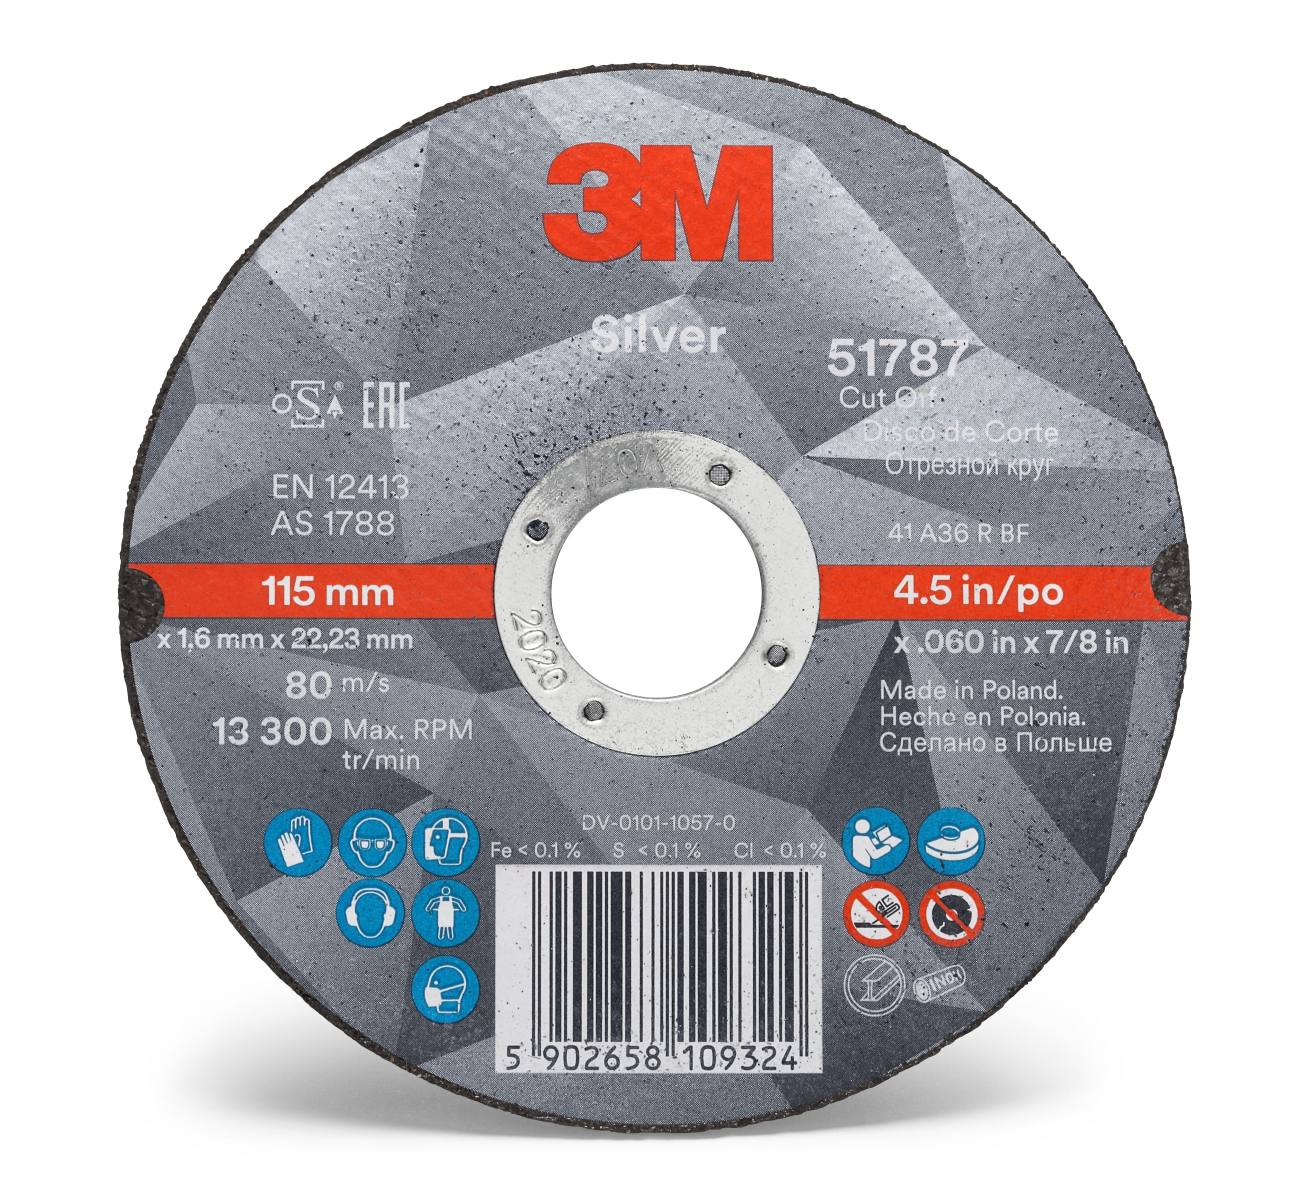 3M Silver Cut-Off Wheel Trennscheibe, 115 mm, 1,0 mm, 22,23 mm, T41, 51785